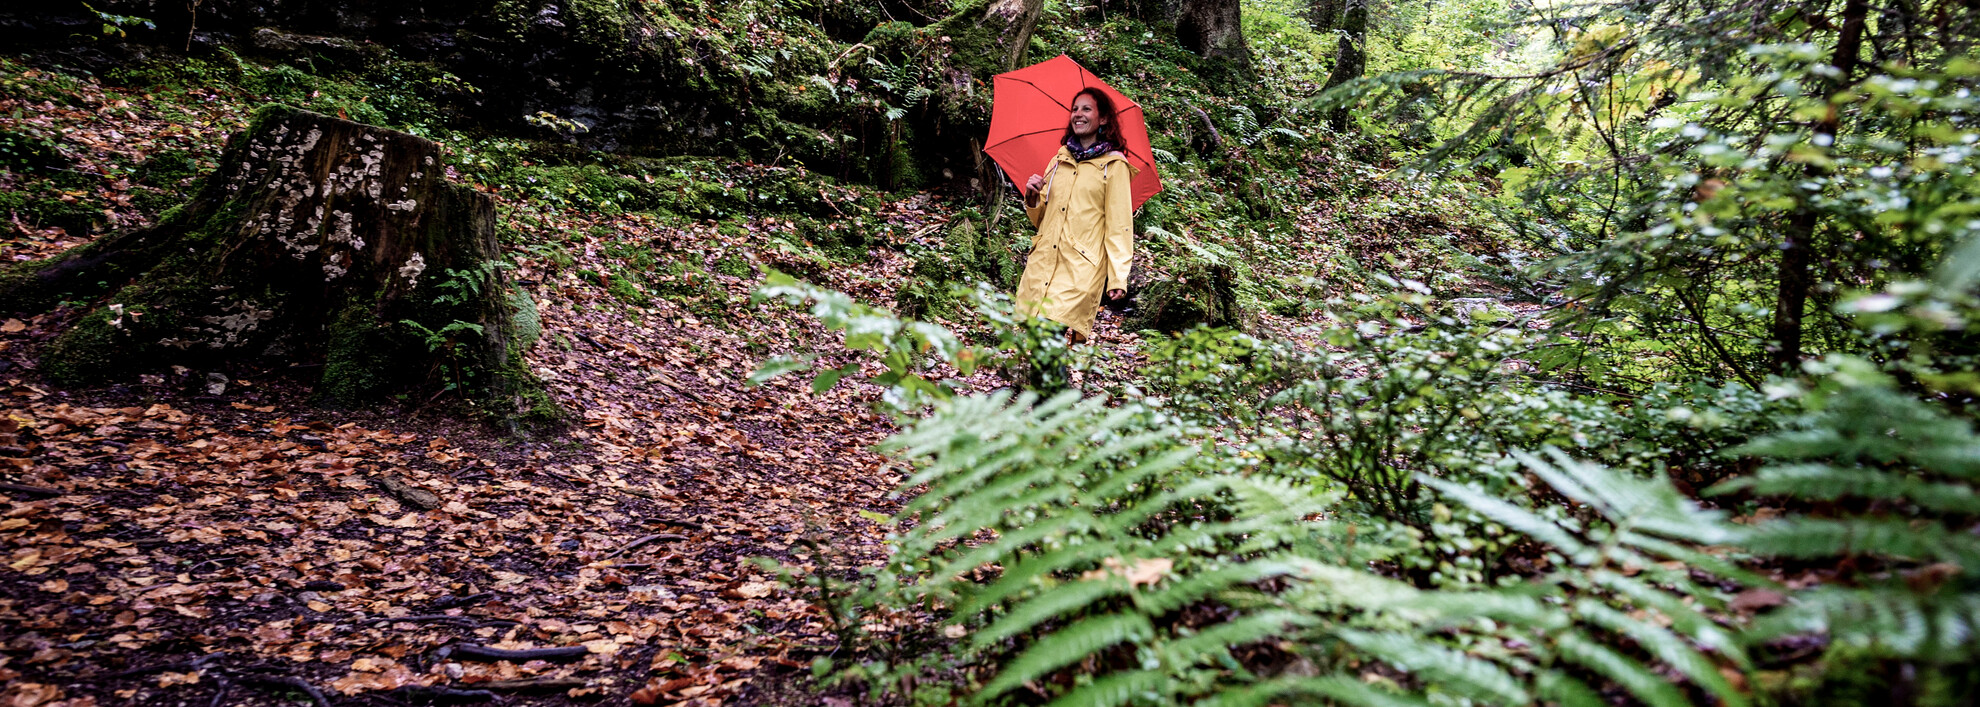 Hiking on rainy days | © Kleinwalsertal Tourismus eGen | Photographer: Dominik Berchtold